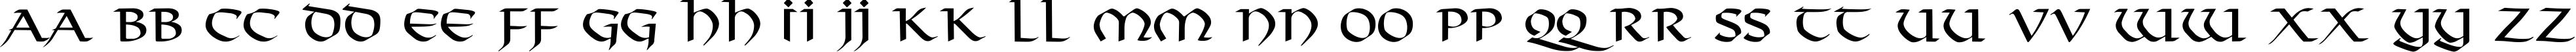 Пример написания английского алфавита шрифтом Viking-Normal